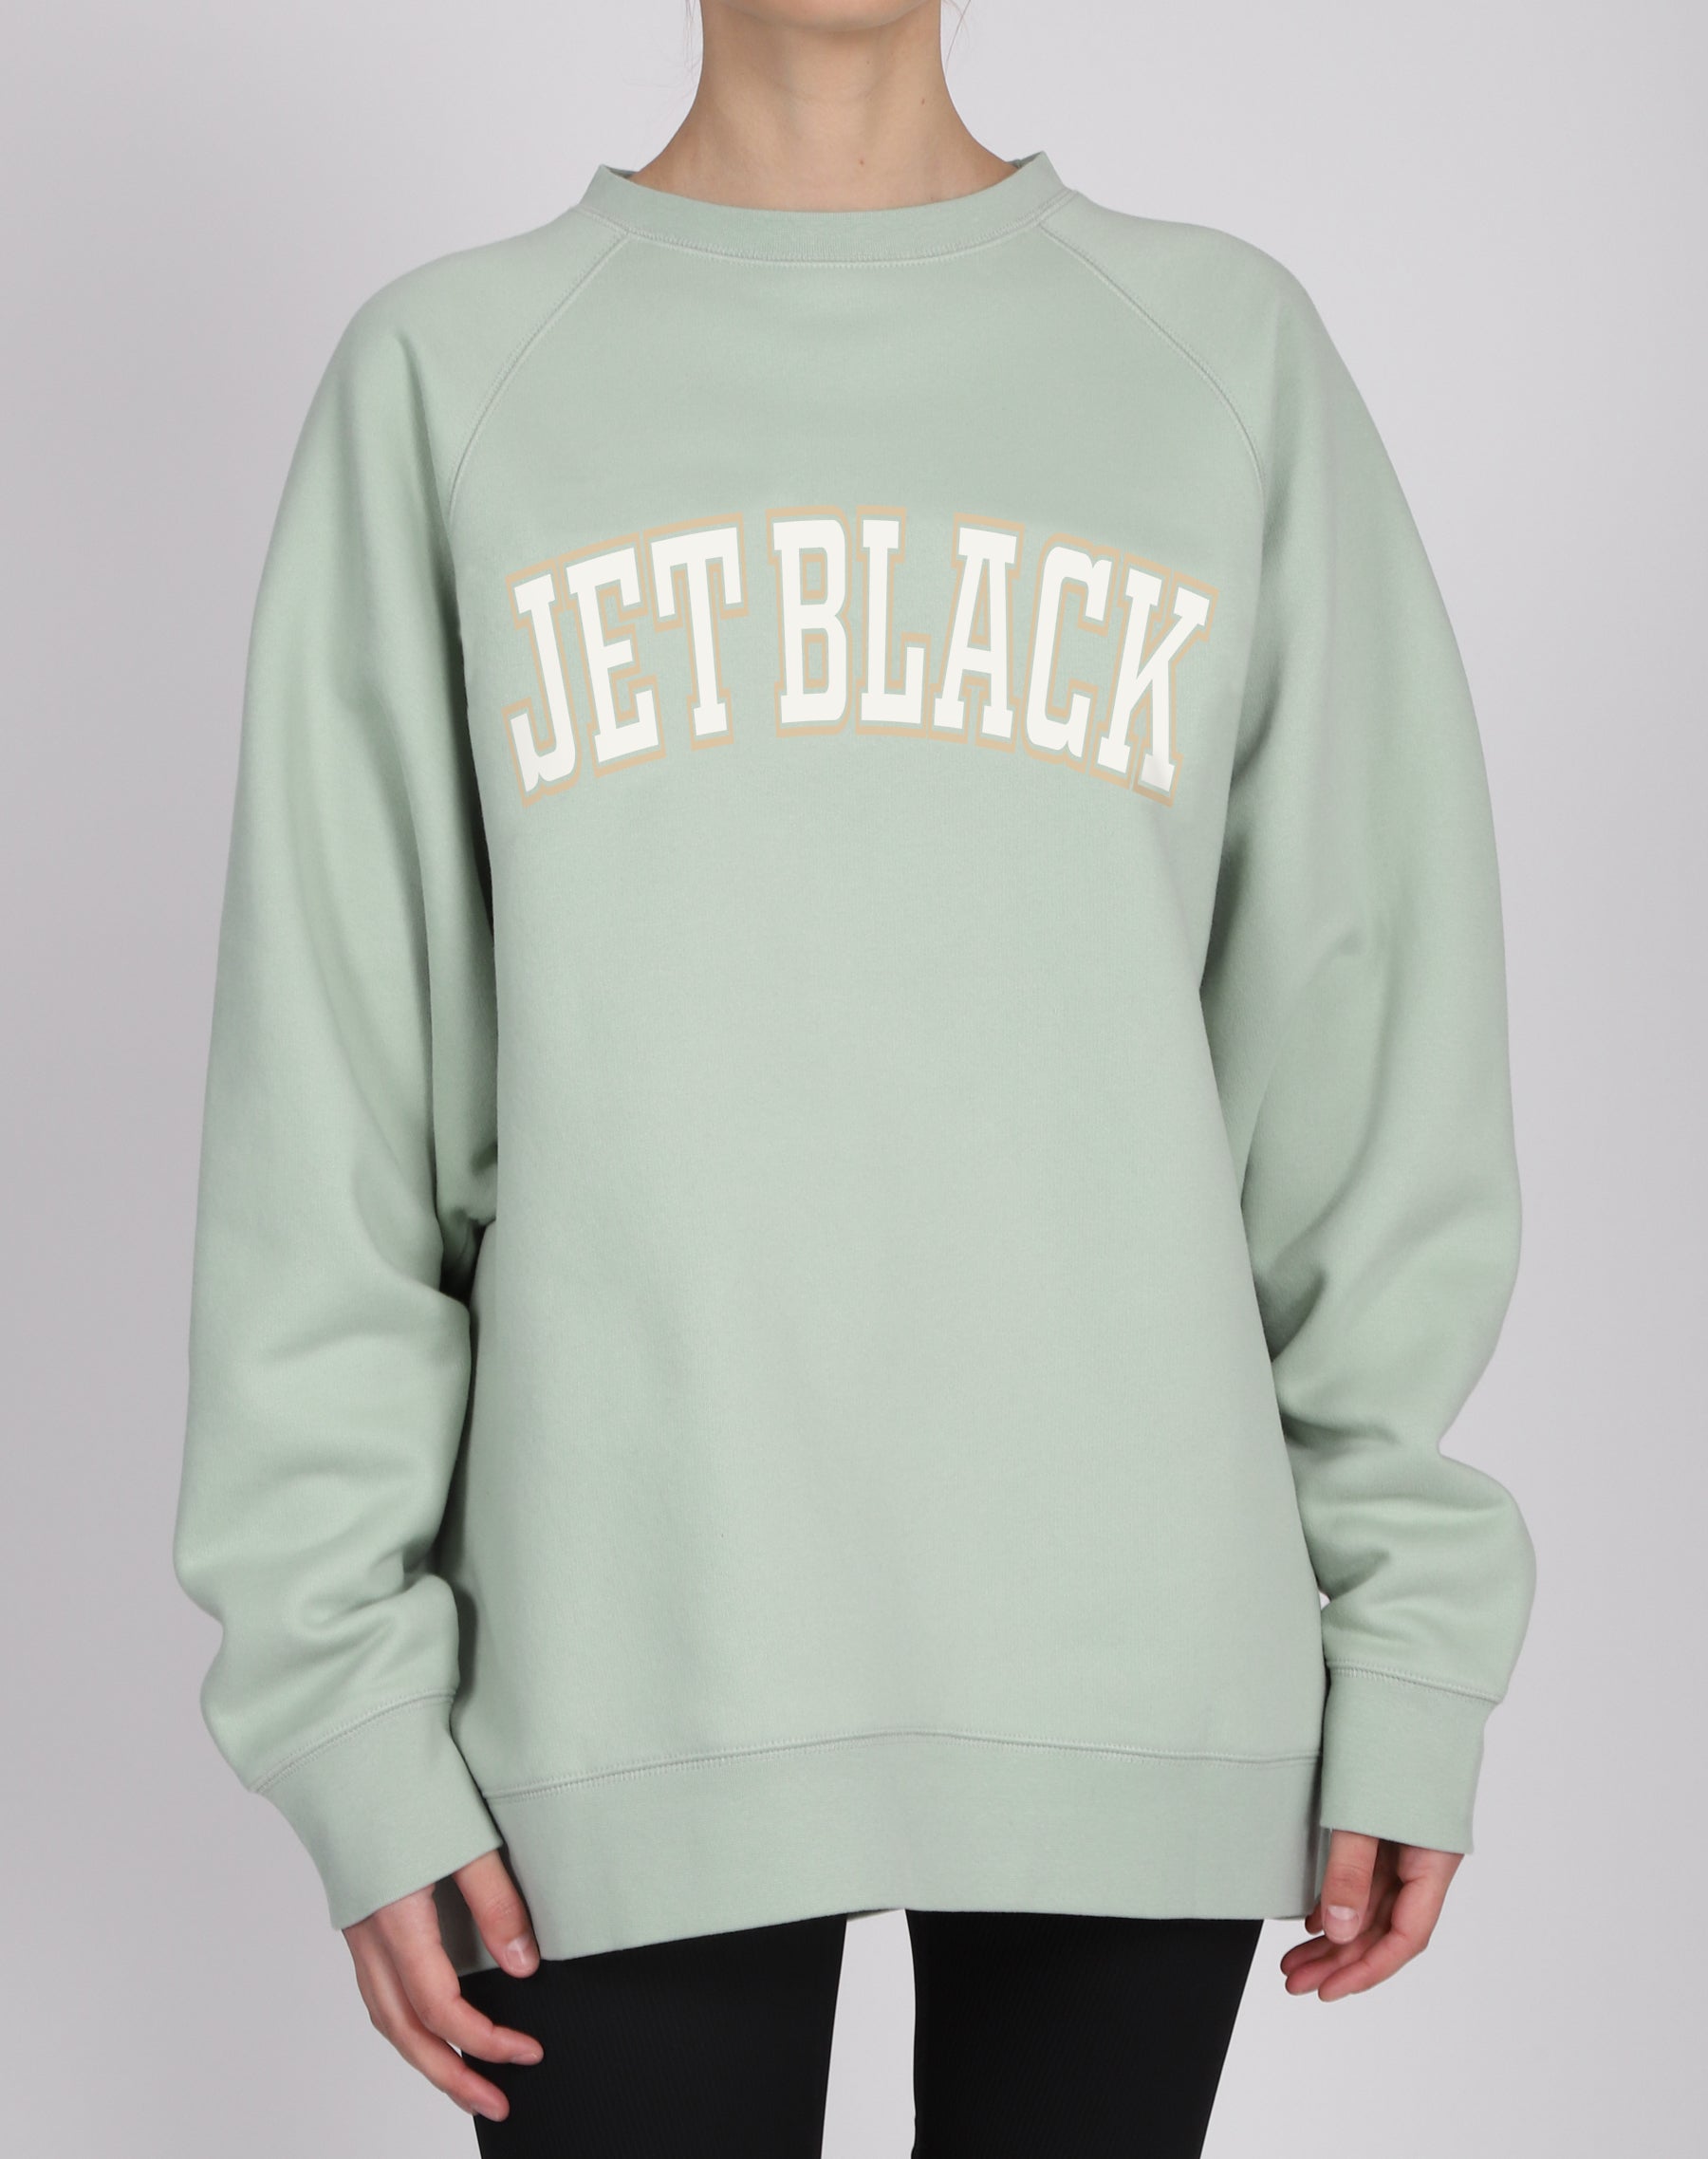 The "JET BLACK" Not Your Boyfriend's Crew Neck Sweatshirt | Sage